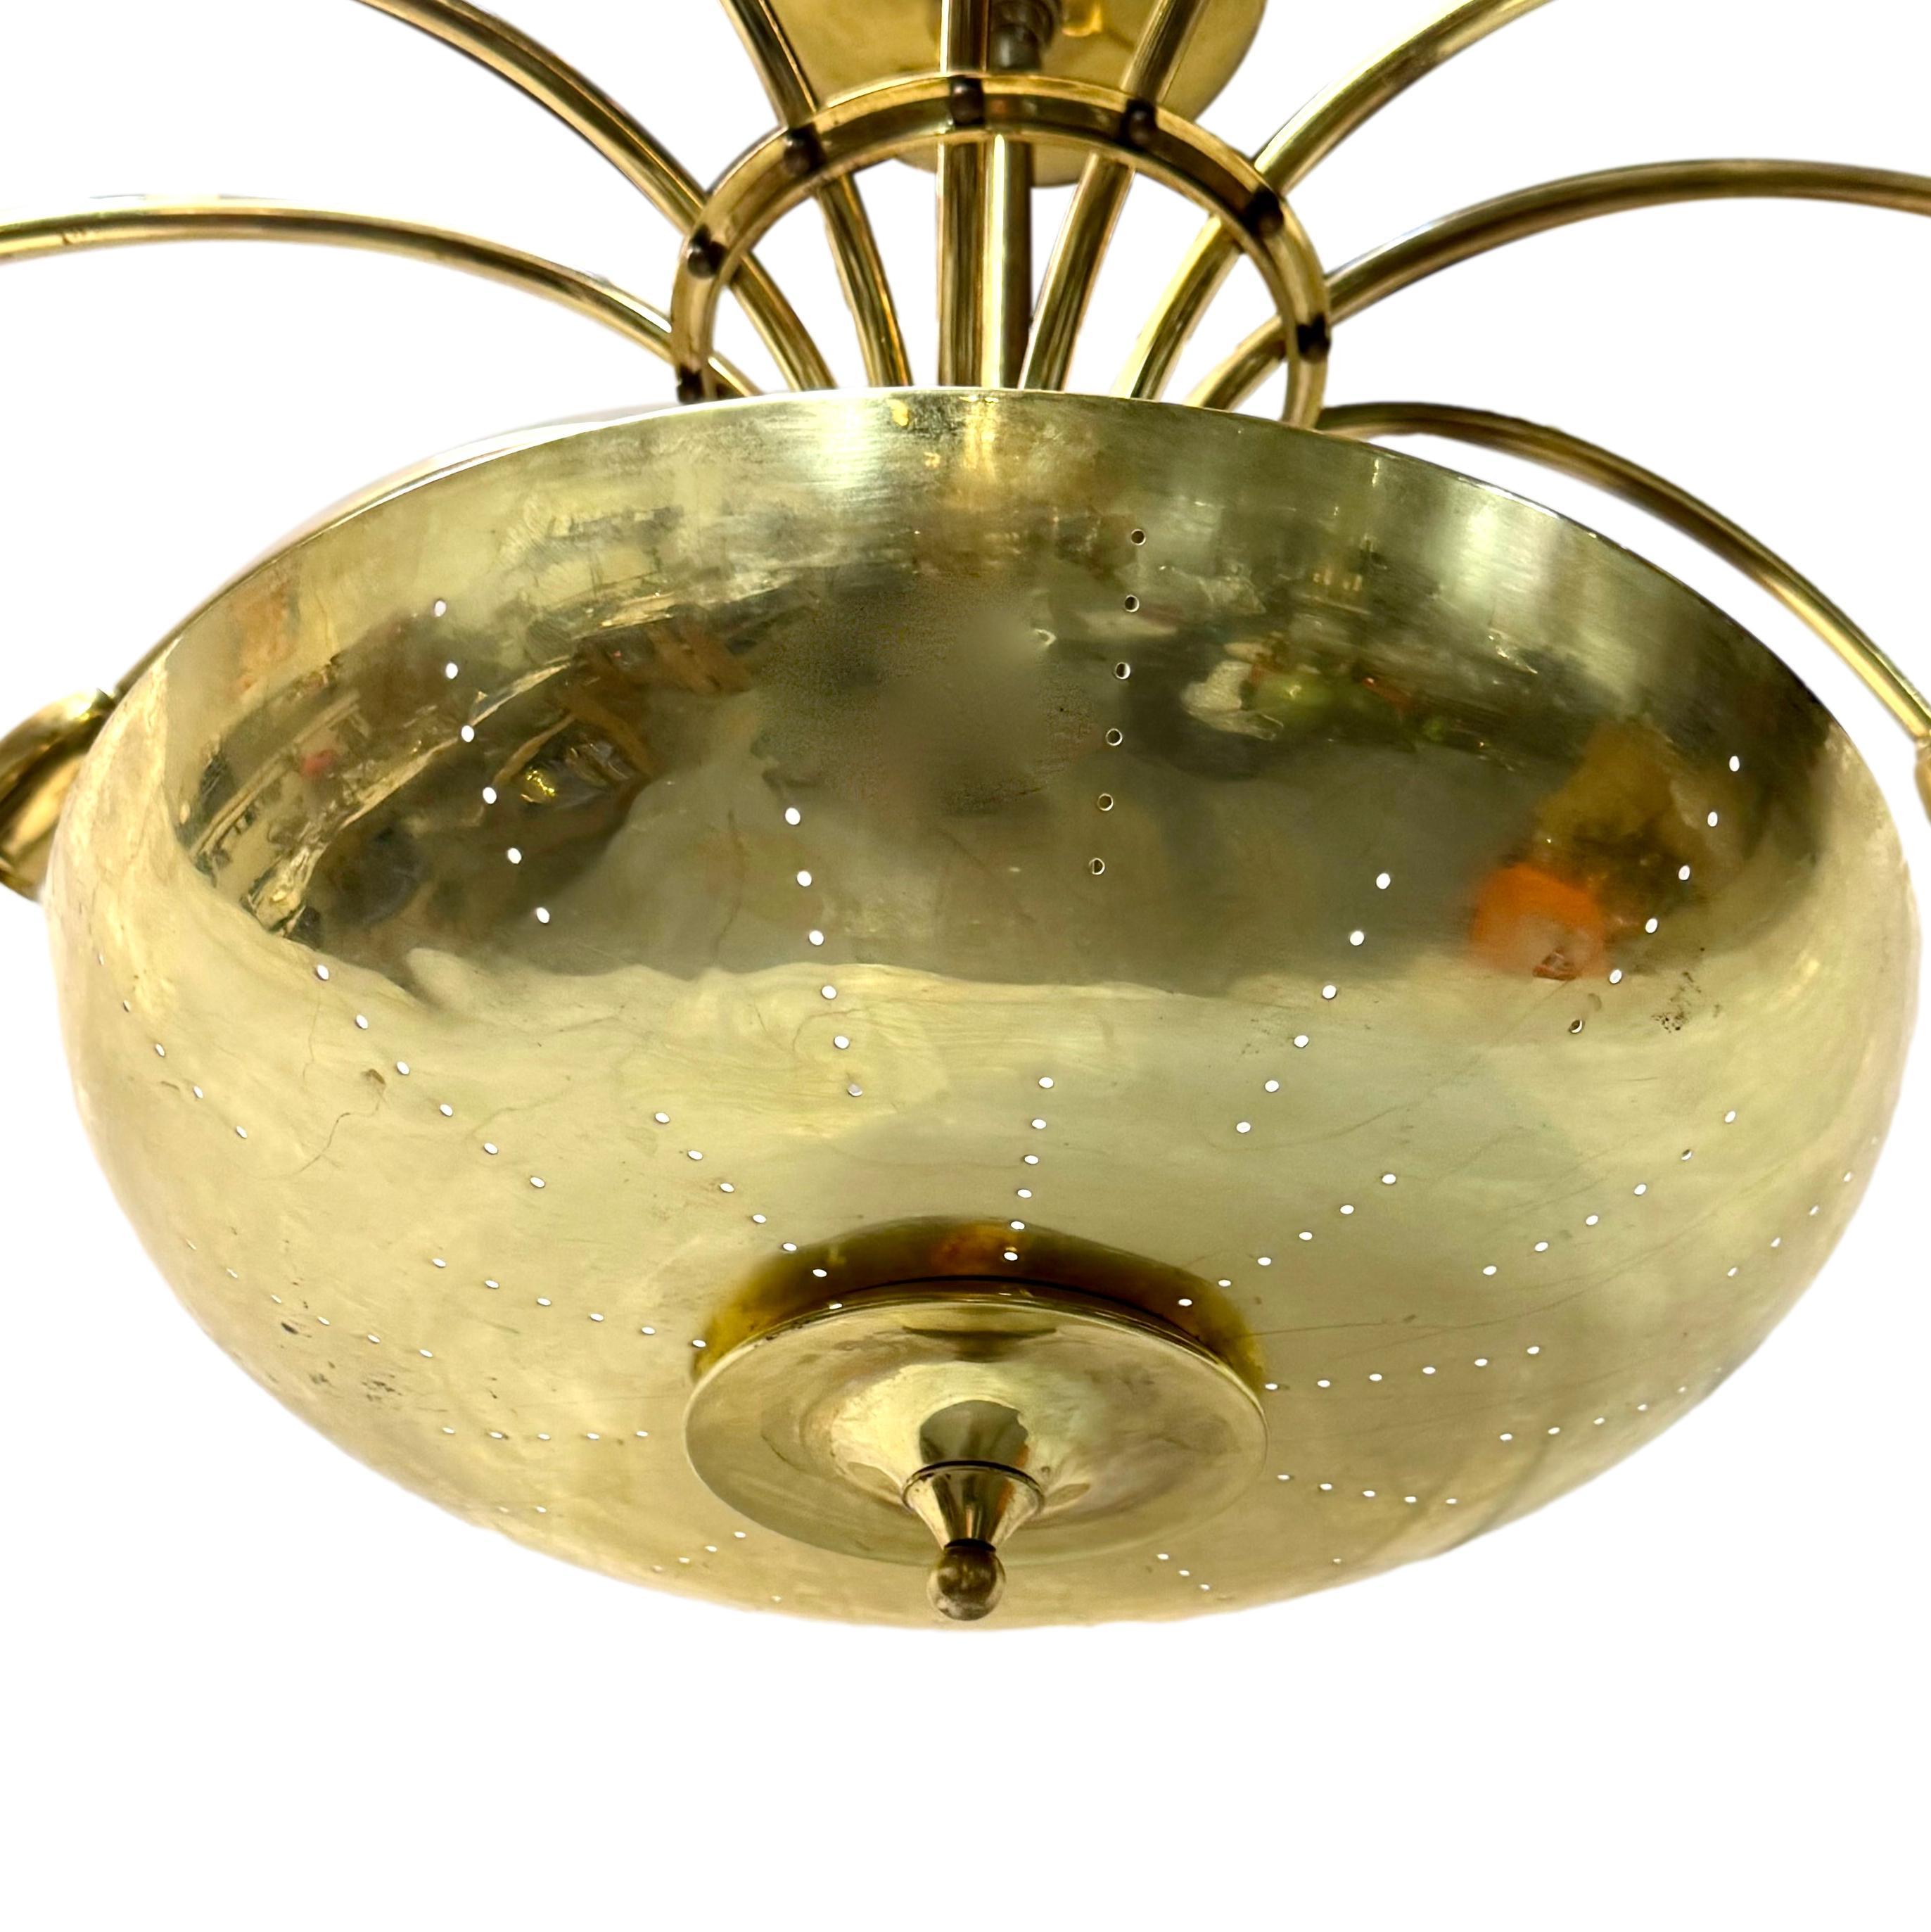 A circa 1950's Italian twelve-arm chandelier with interior lights.

Measurements:
Drop: 18